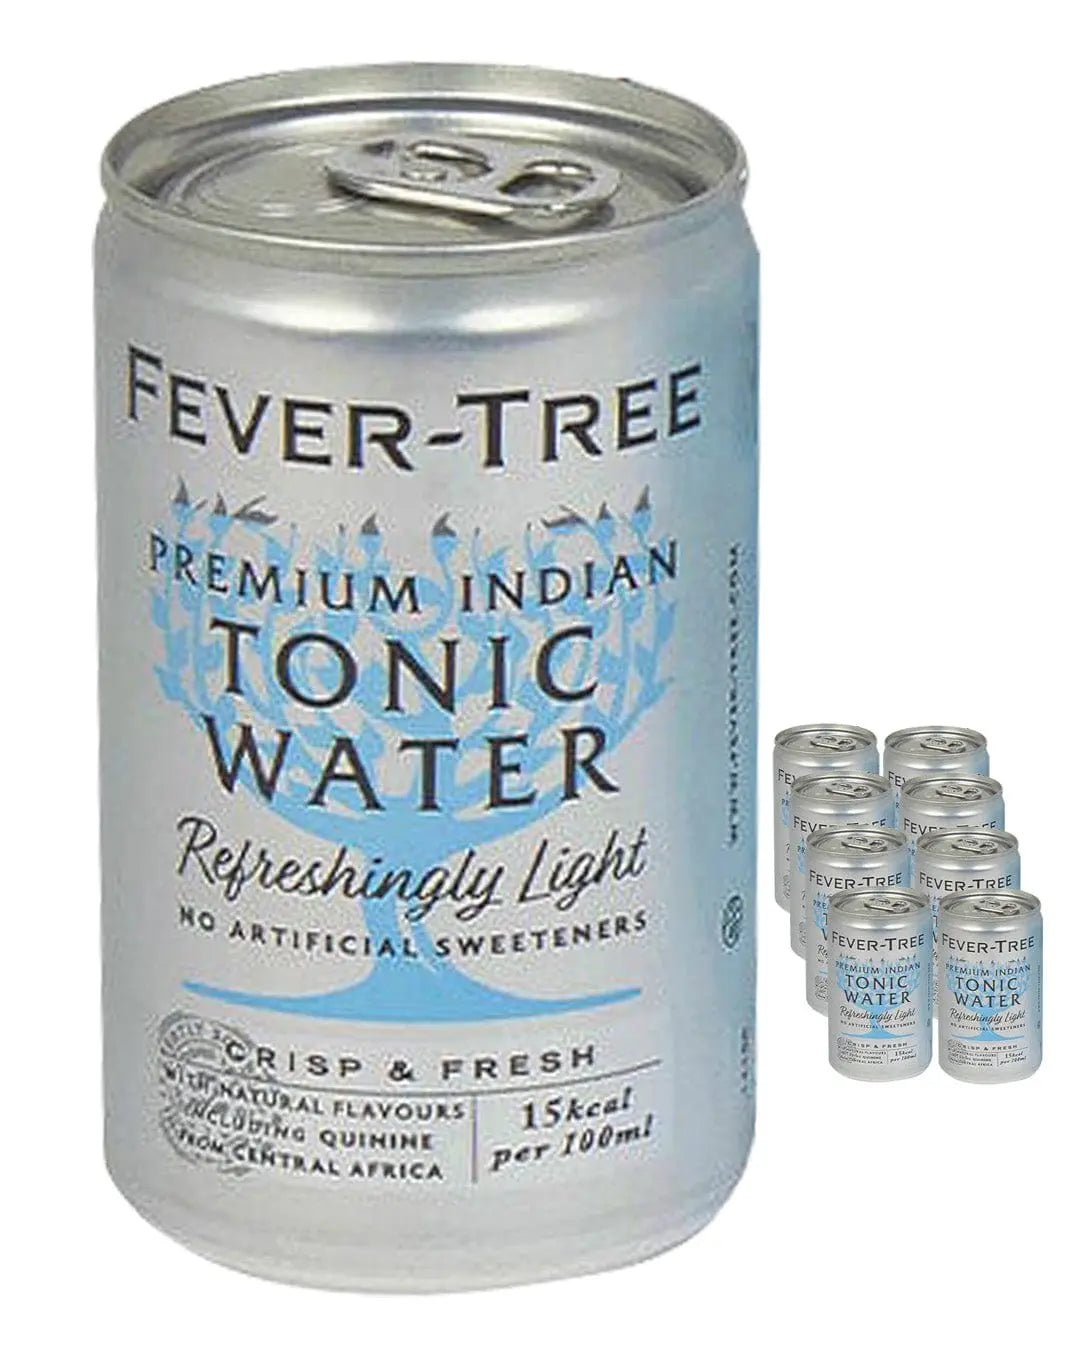 Fever-Tree Refreshingly Light Indian Tonic Water Fridge Pack, 8 x 150 ml Tonics 05060108451031